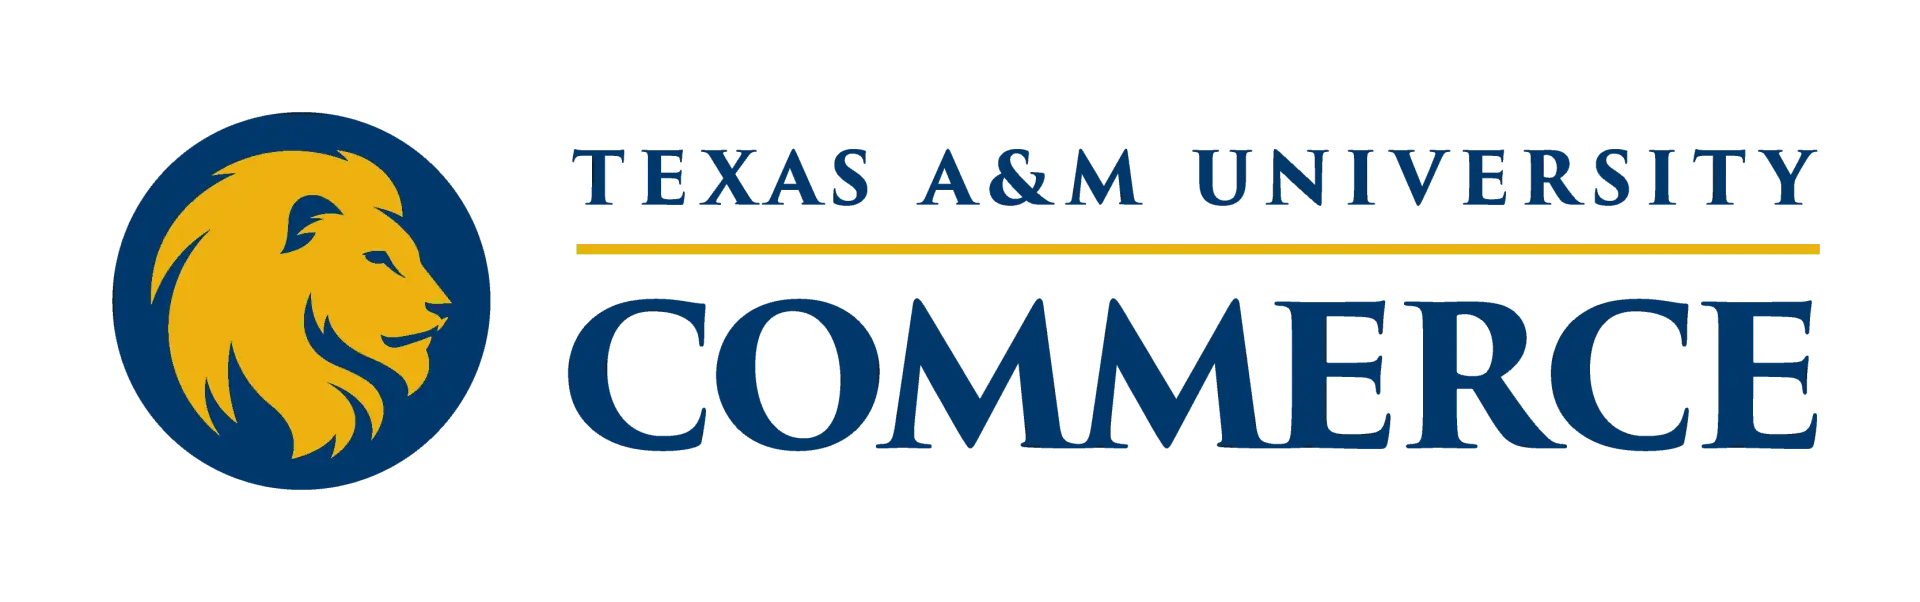 Texas A&M University Commerce